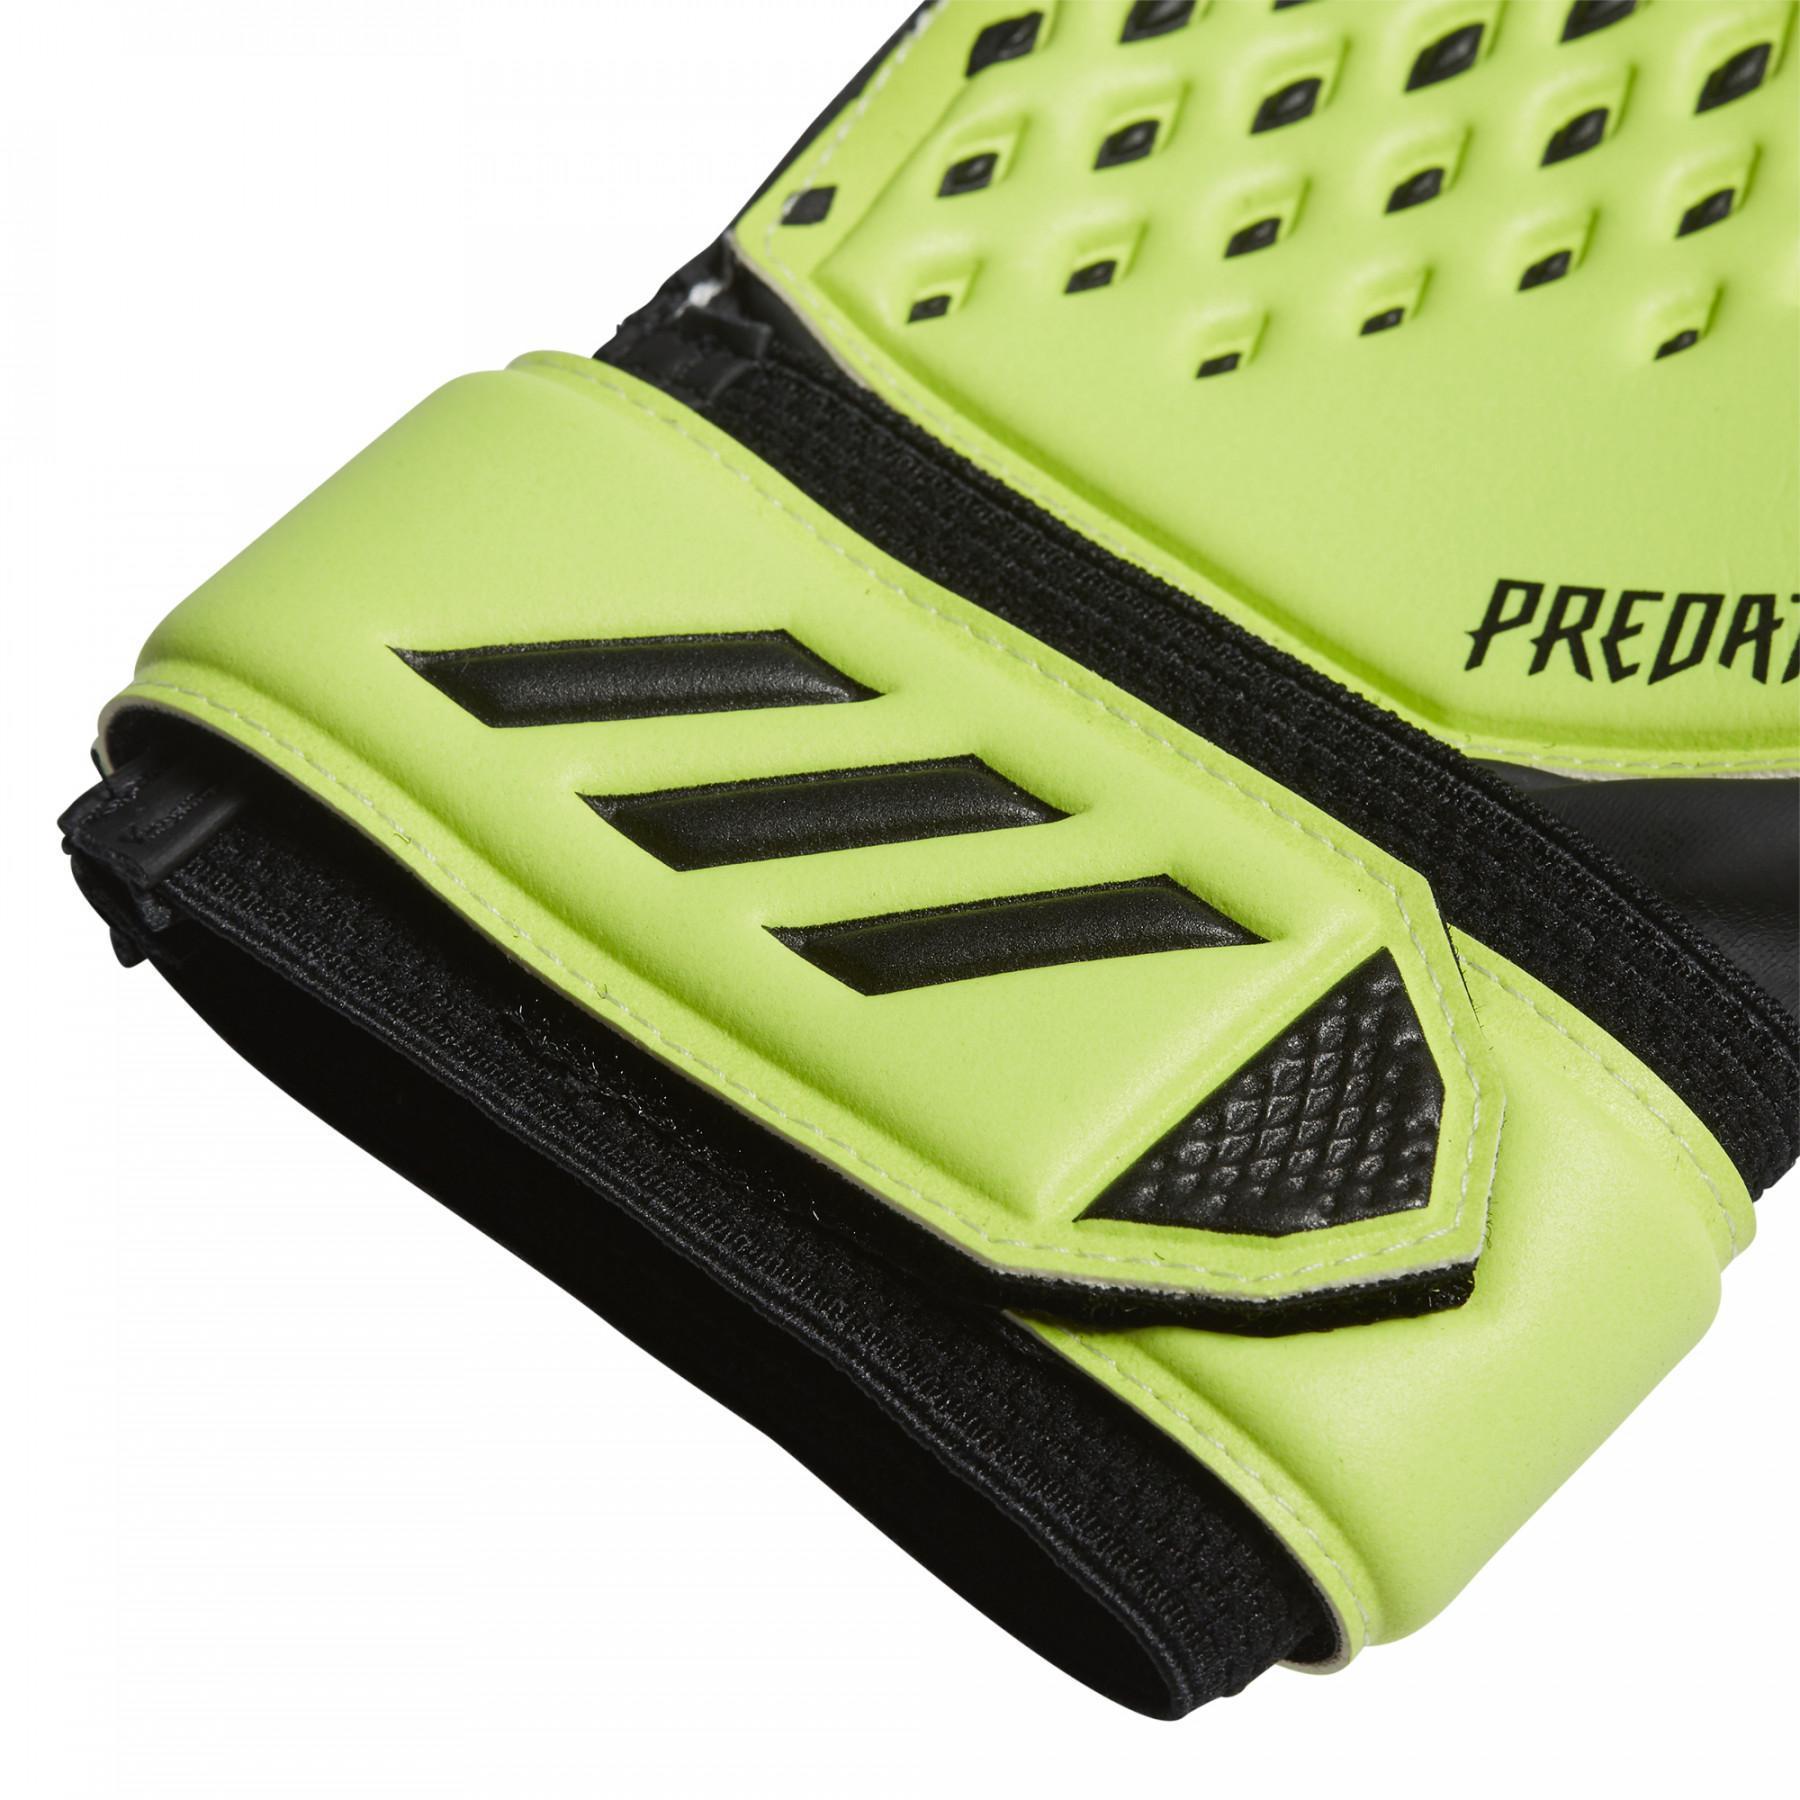 Torwarthandschuhe adidas Predator 20 Training